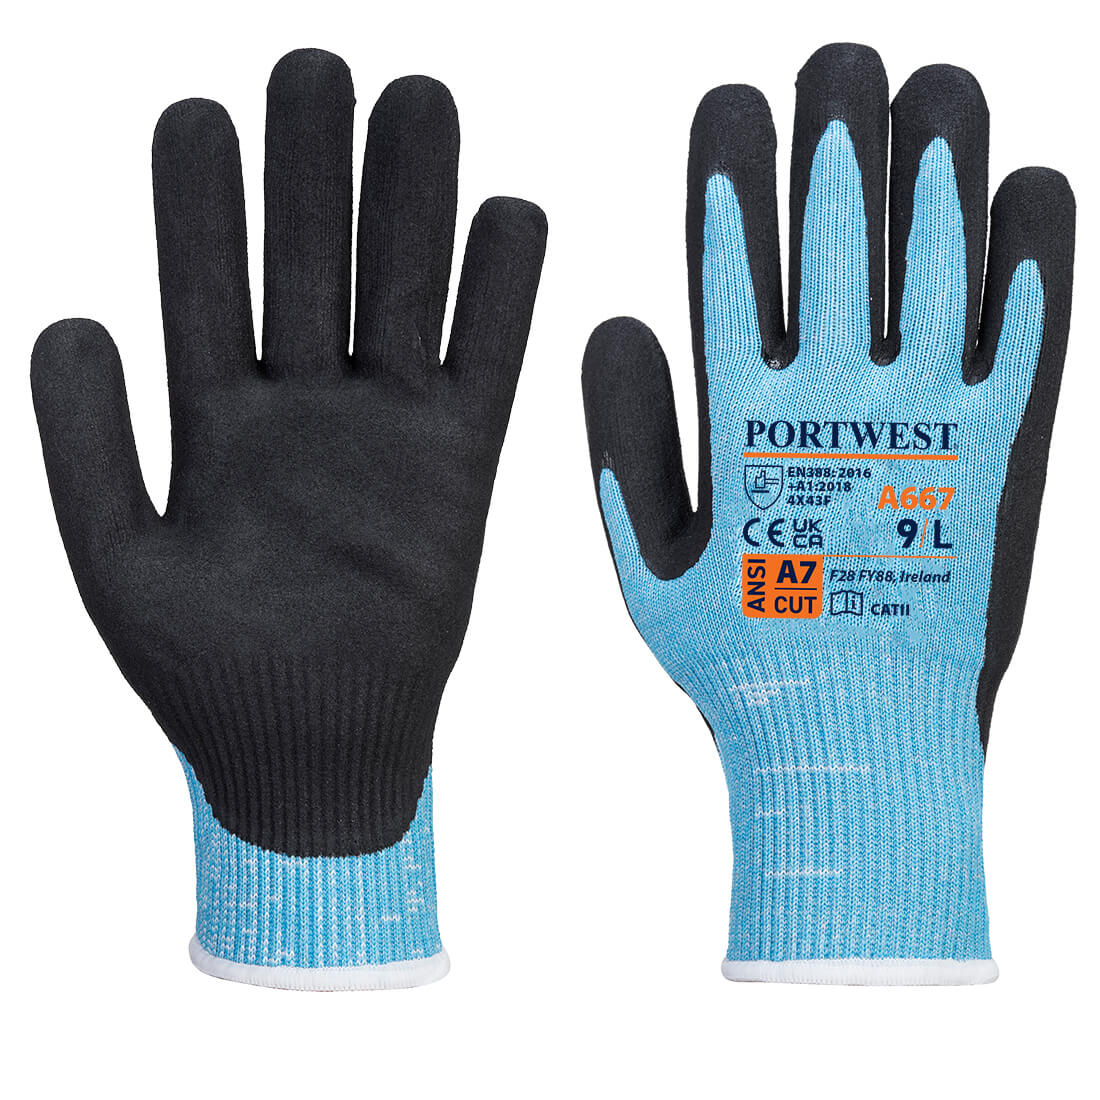 Portwest-Glove